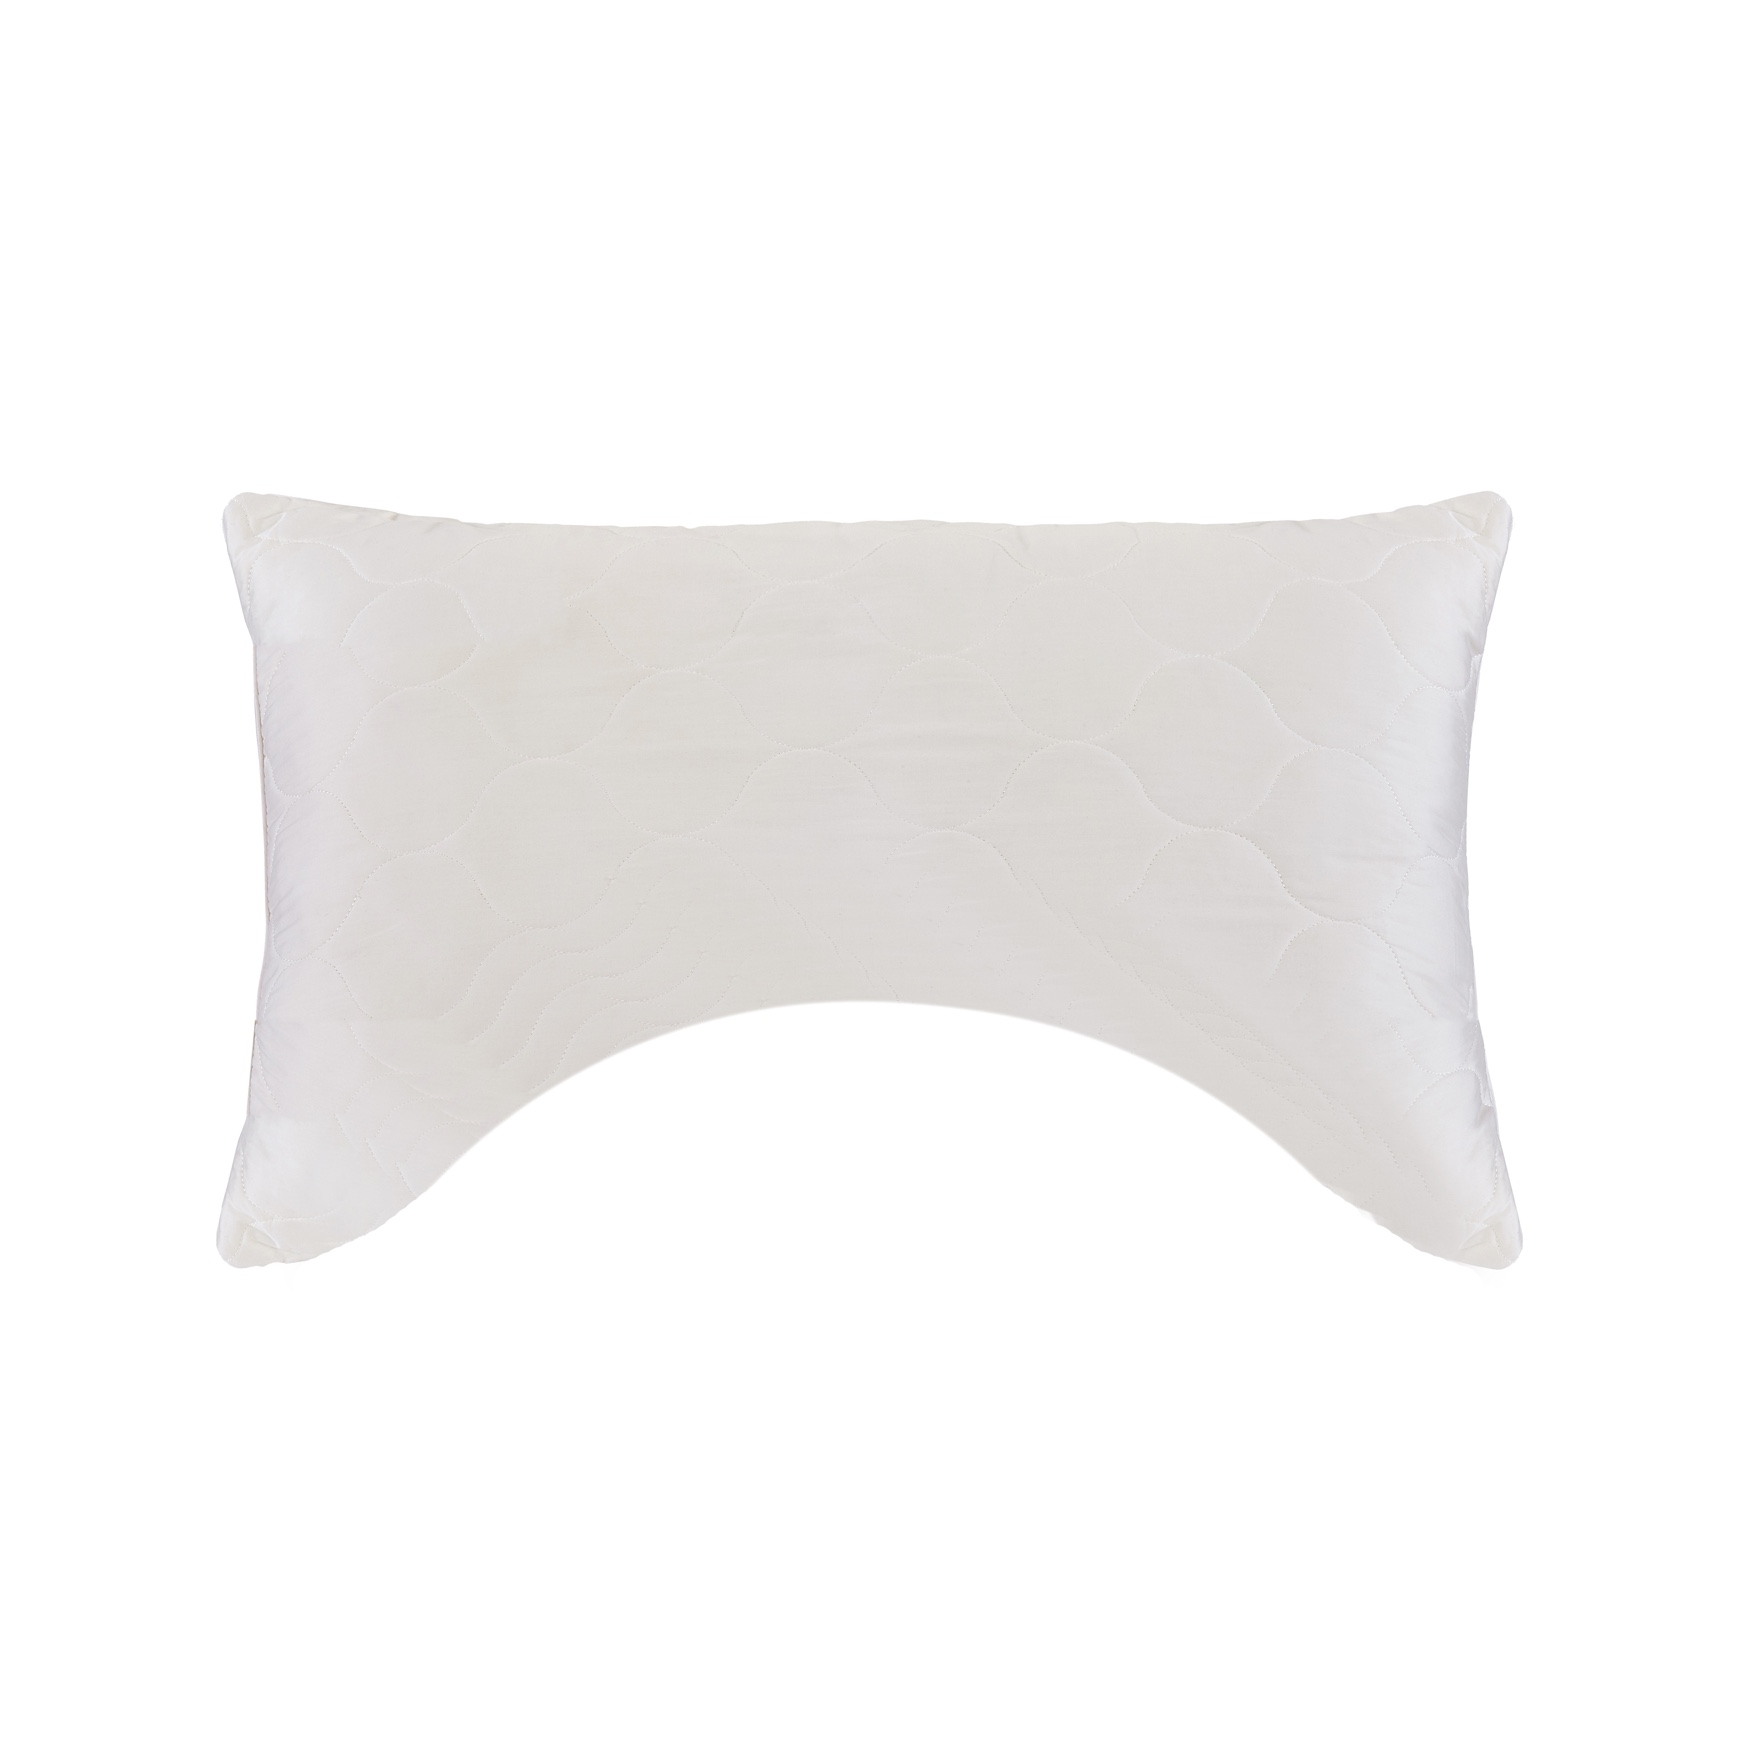 myLatex Side Pillow, 